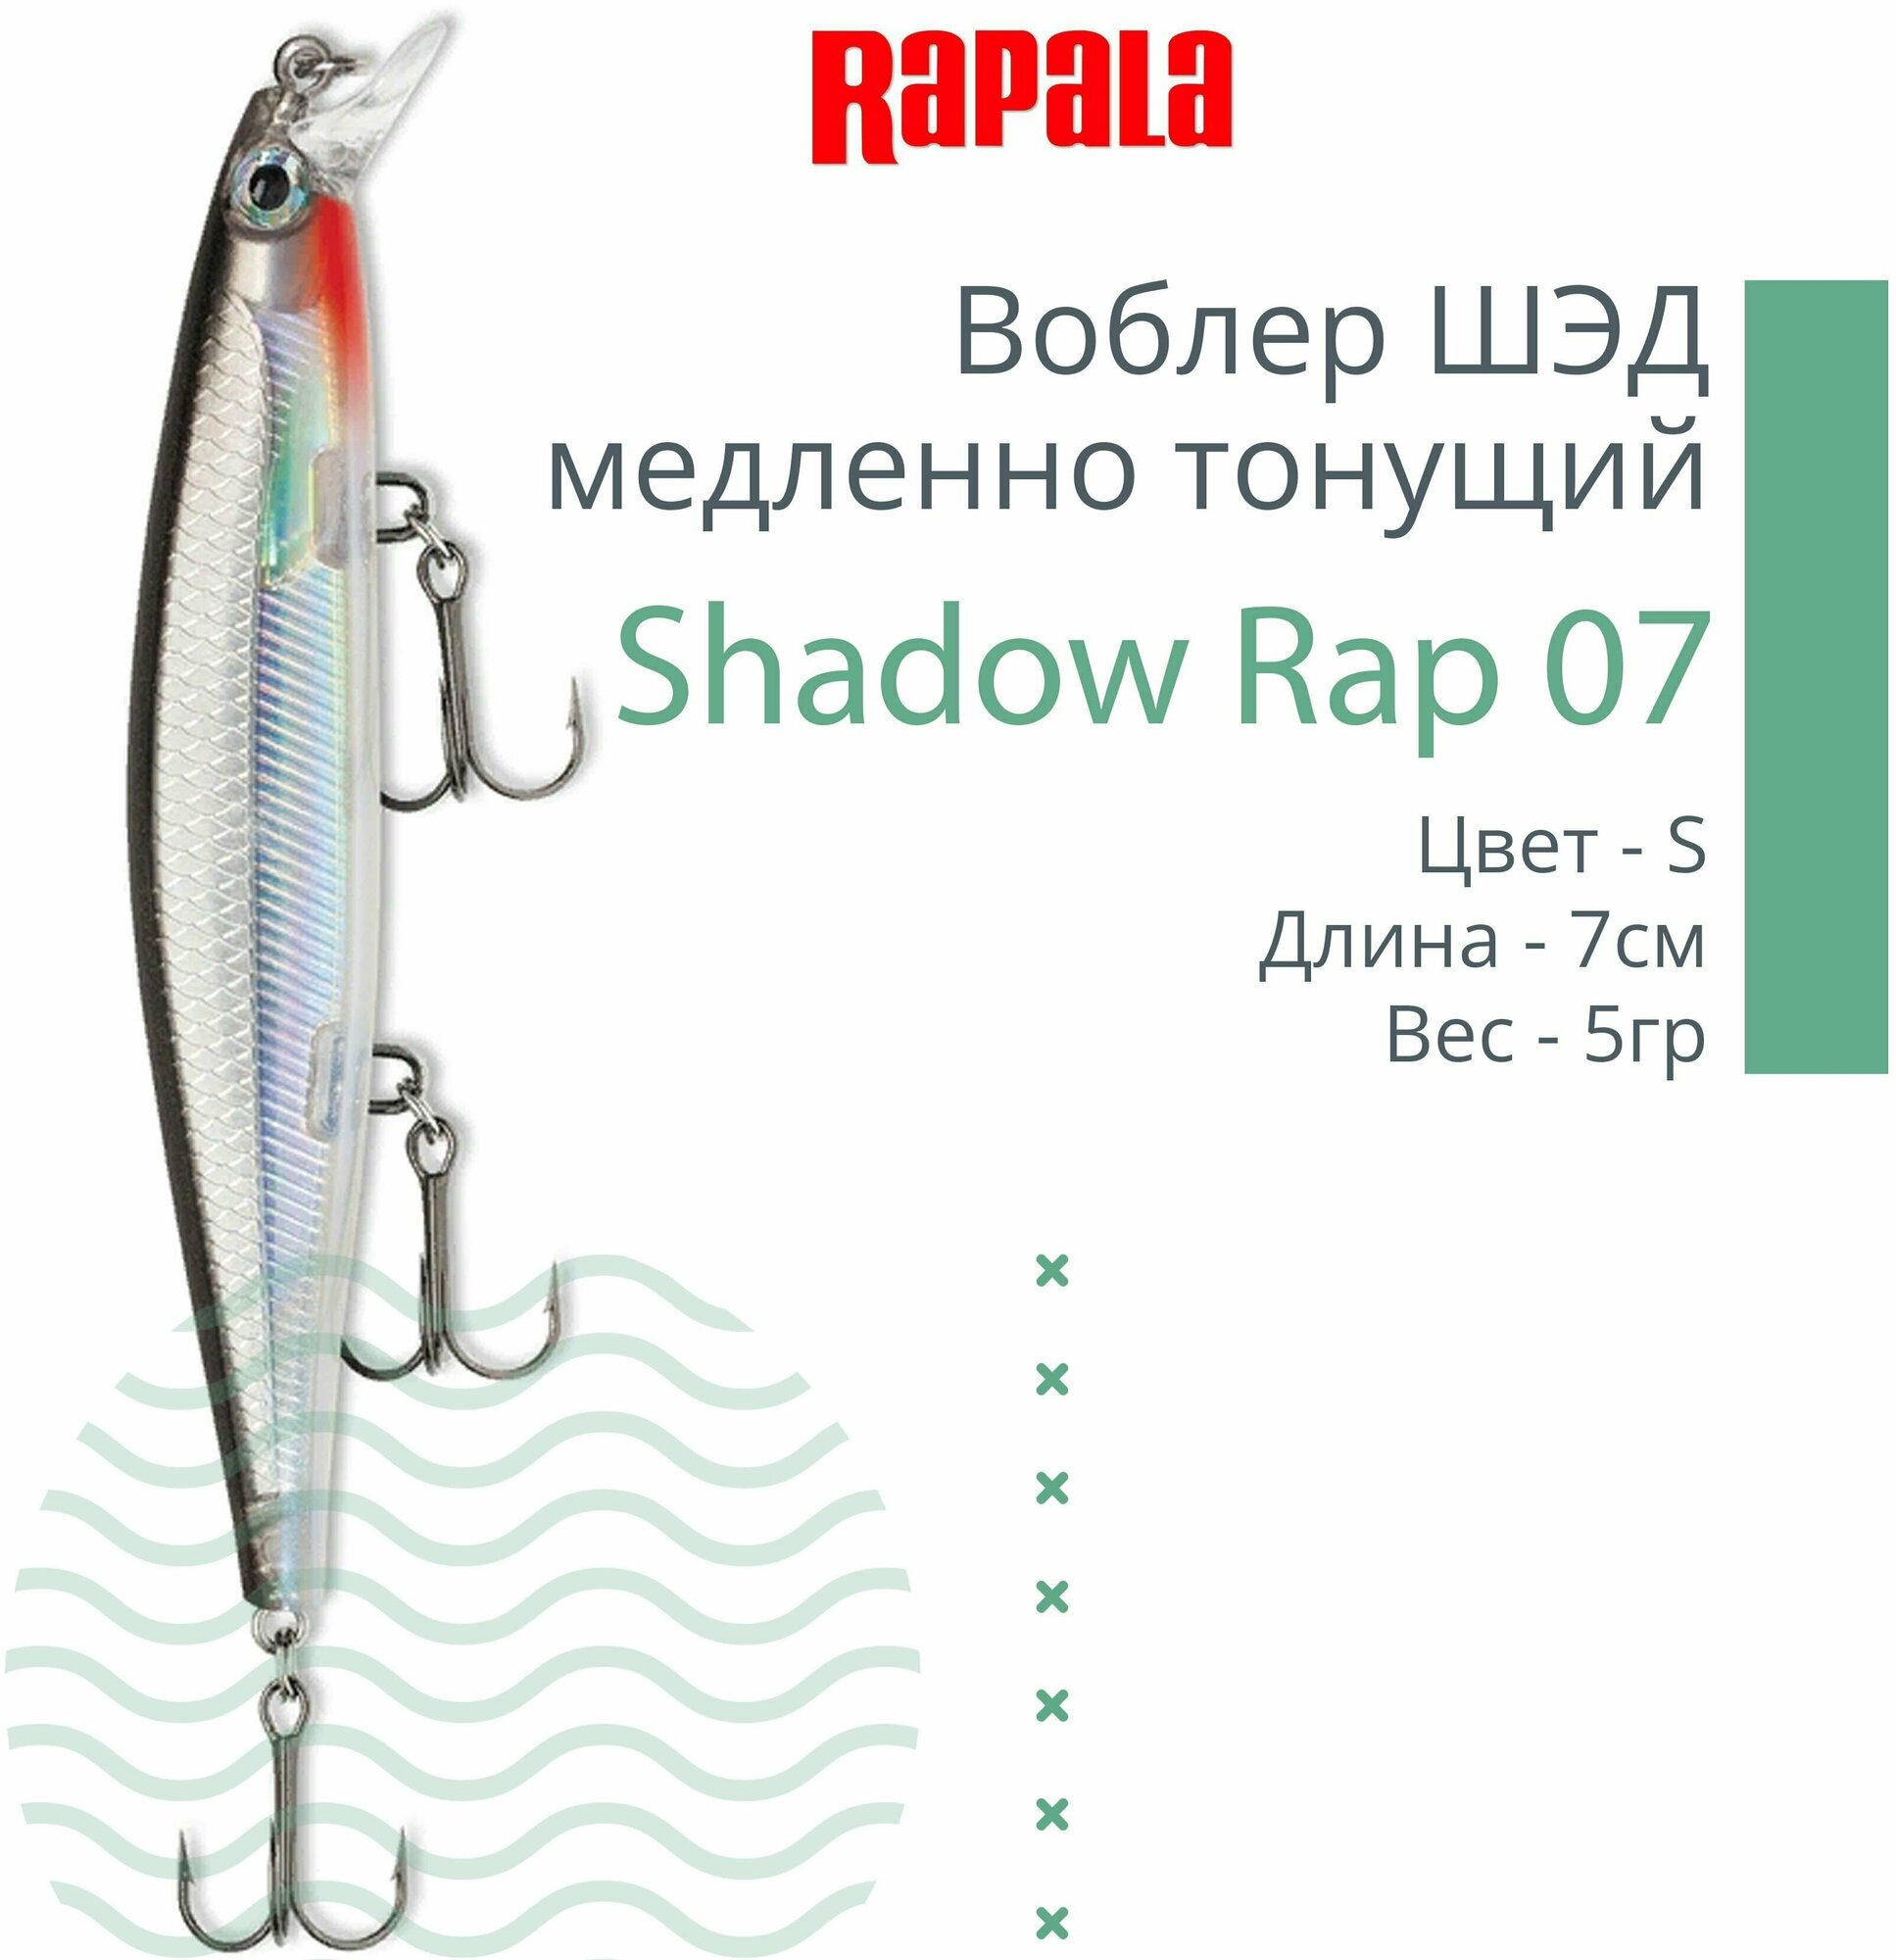 Воблер для рыбалки RAPALA Shadow Rap 07, 7см, 5гр, цвет S, медленно тонущий